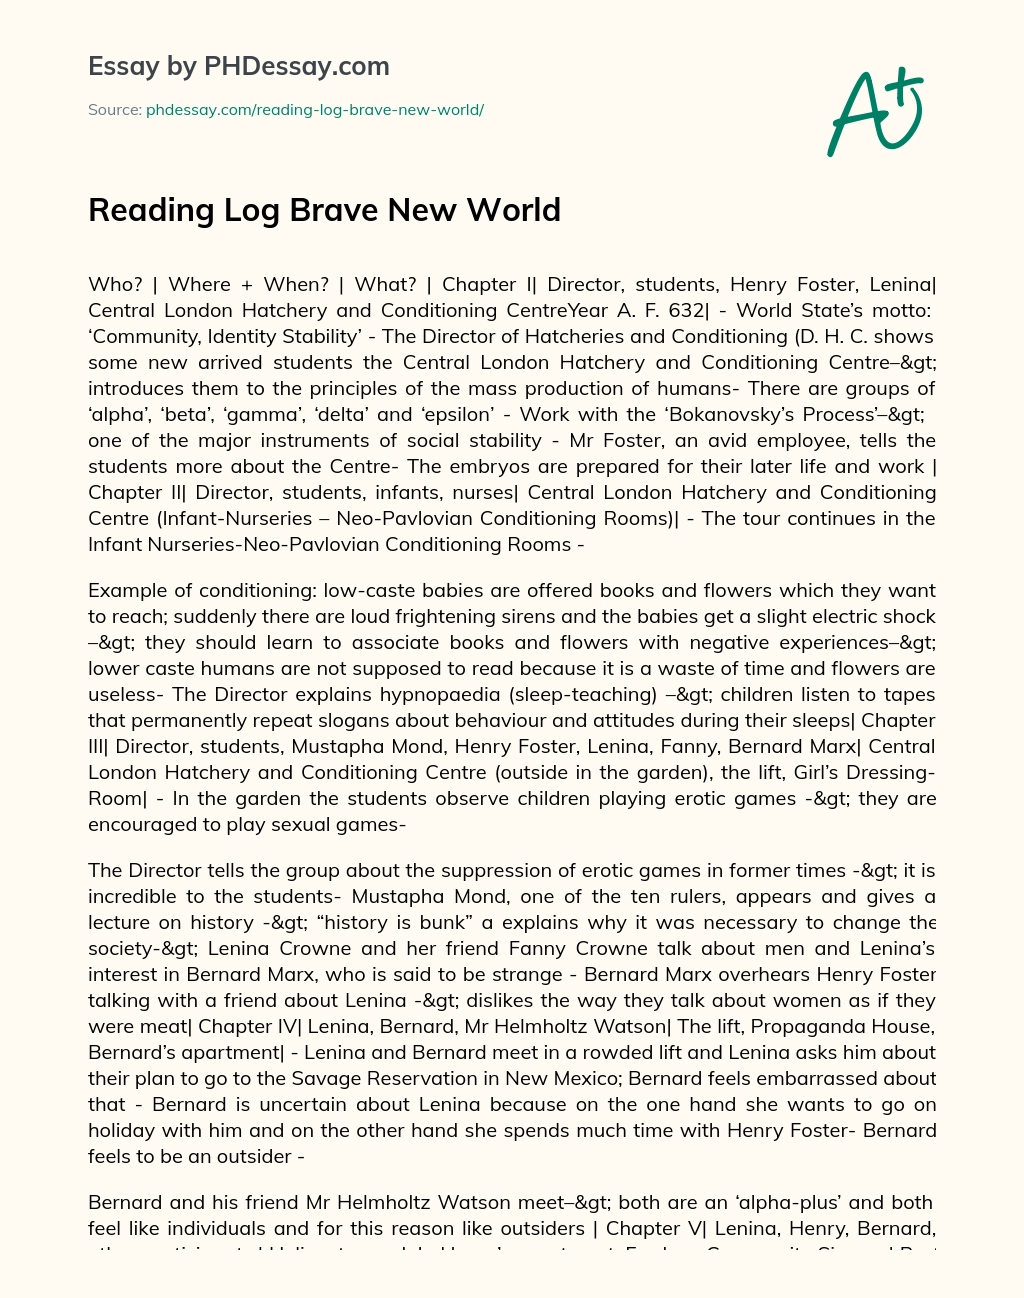 Reading Log Brave New World essay